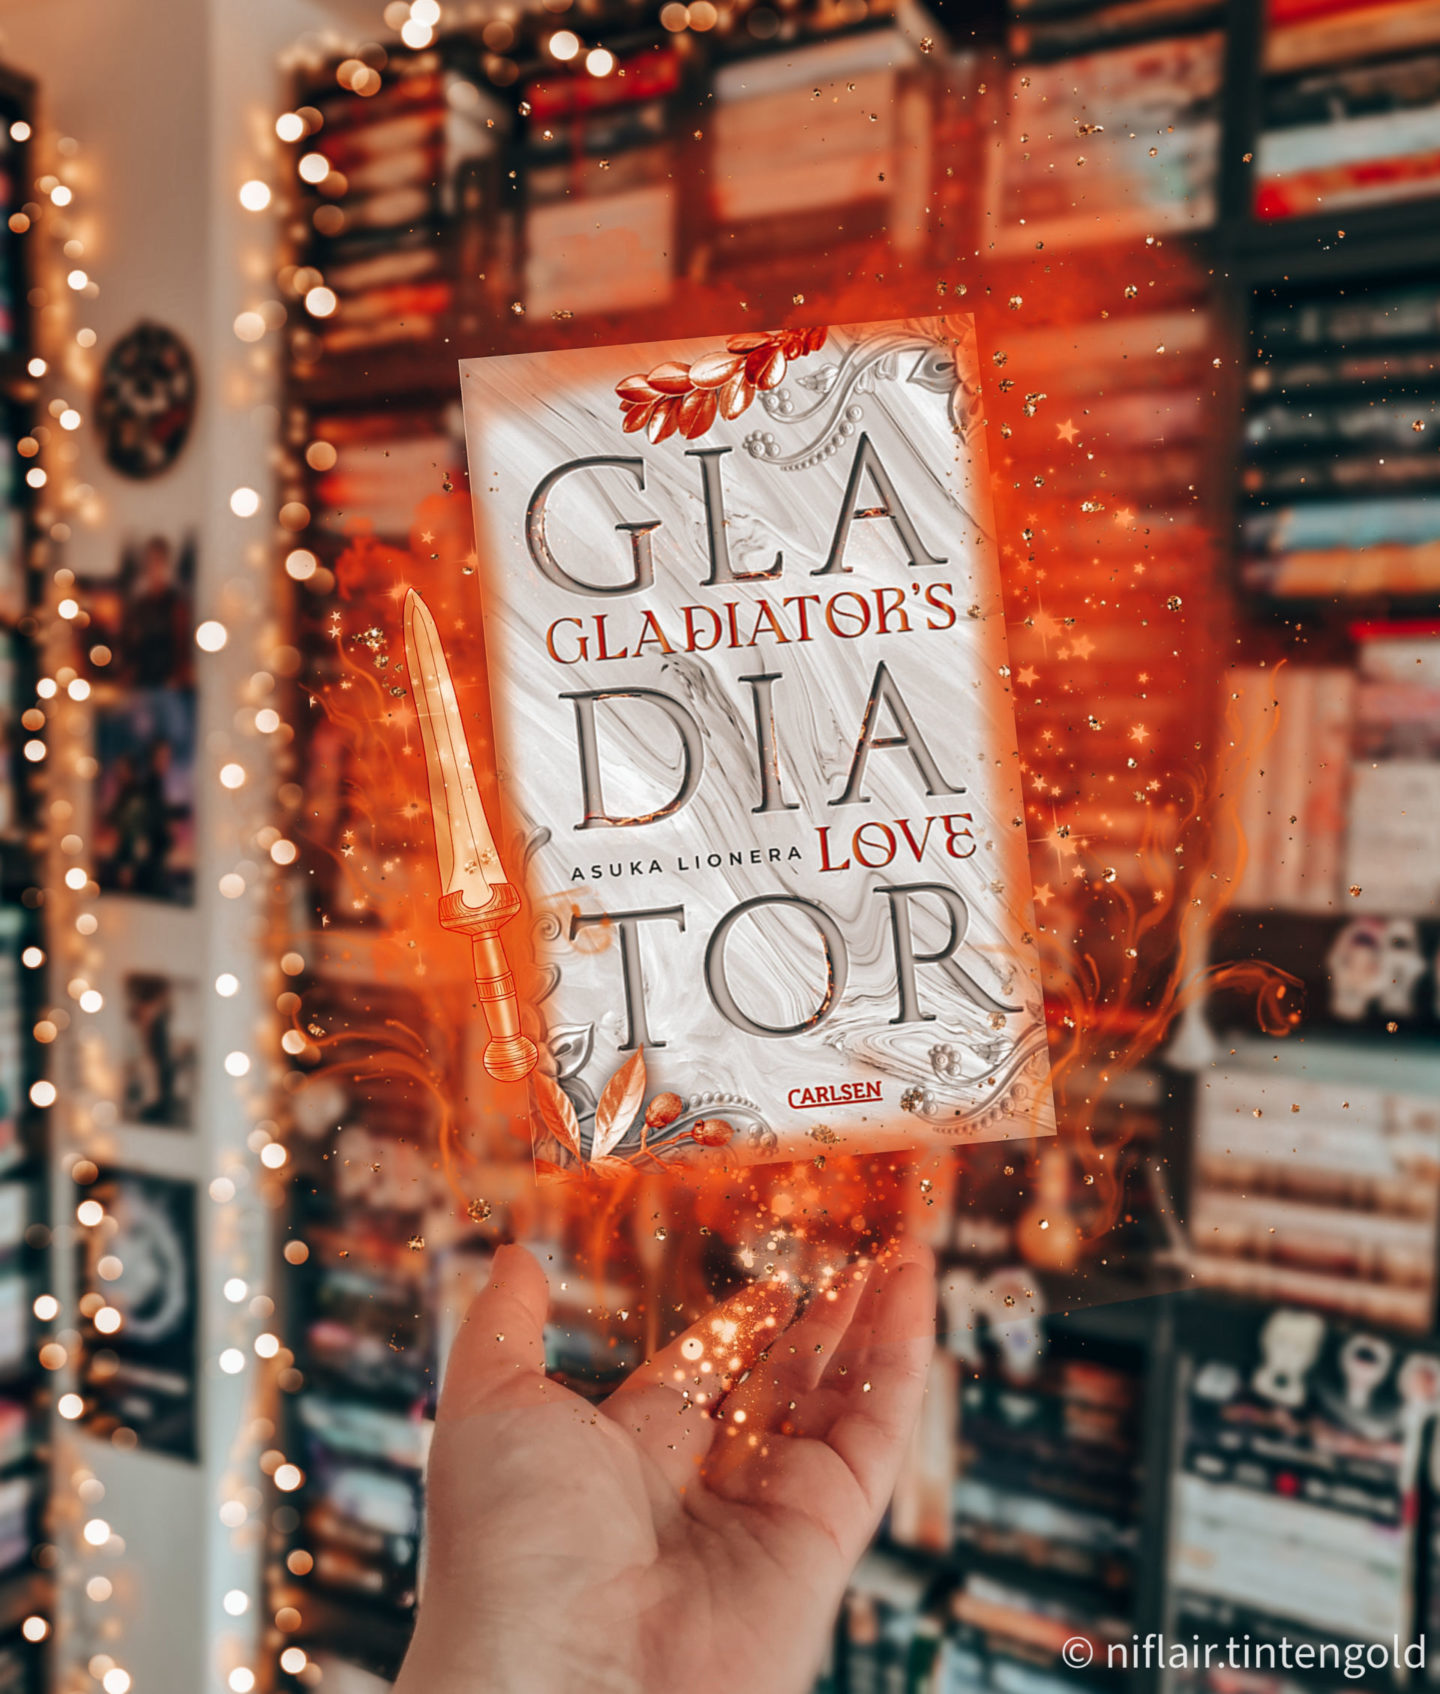 Gladiator’s Love – Asuka Lionera